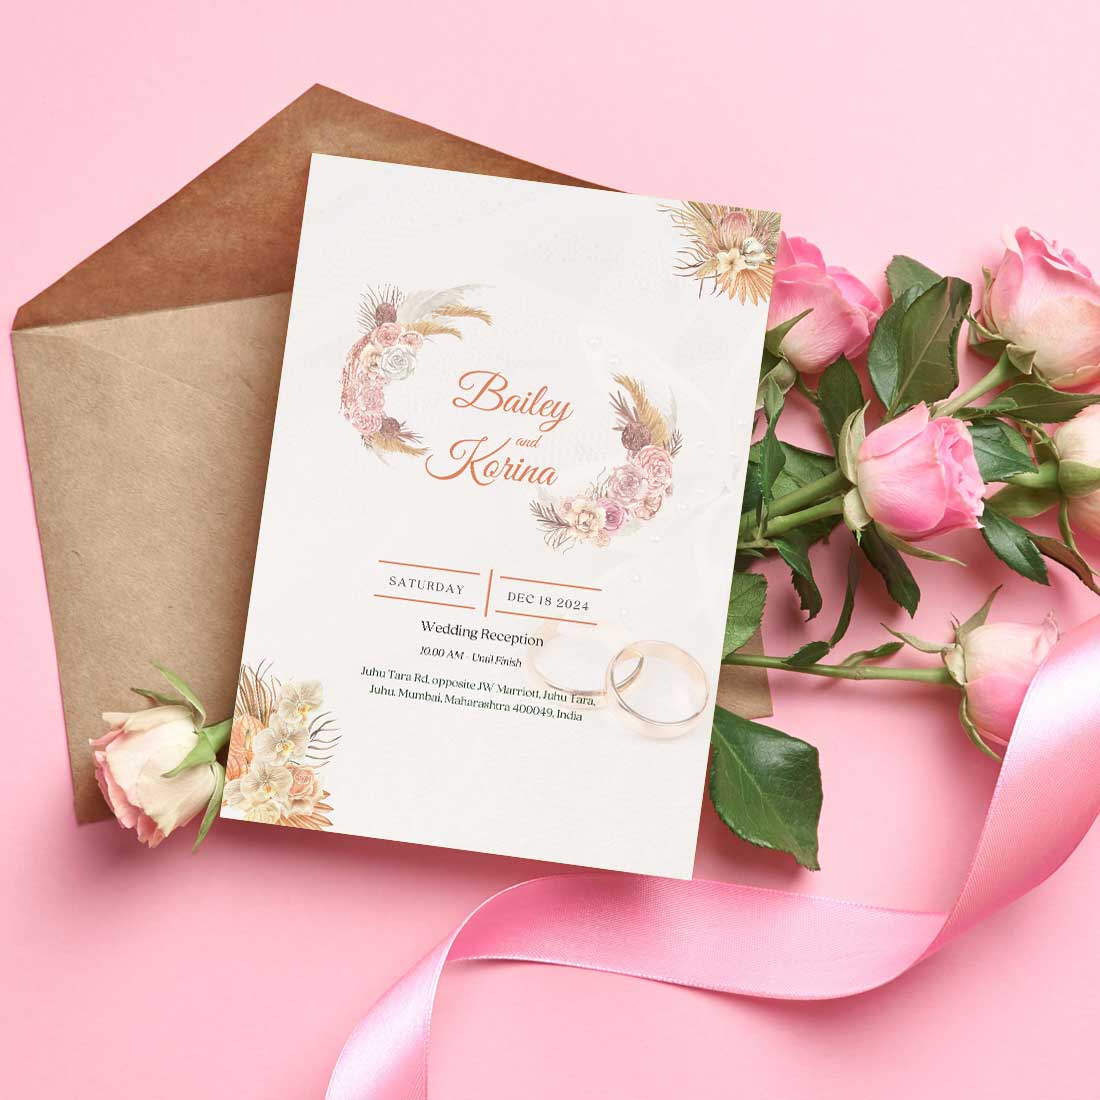 Create Invitation Card for Wedding - Custom Wedding Invitation-6x9 inches (Acrylic or Satin on Paper Board)(25 pcs)